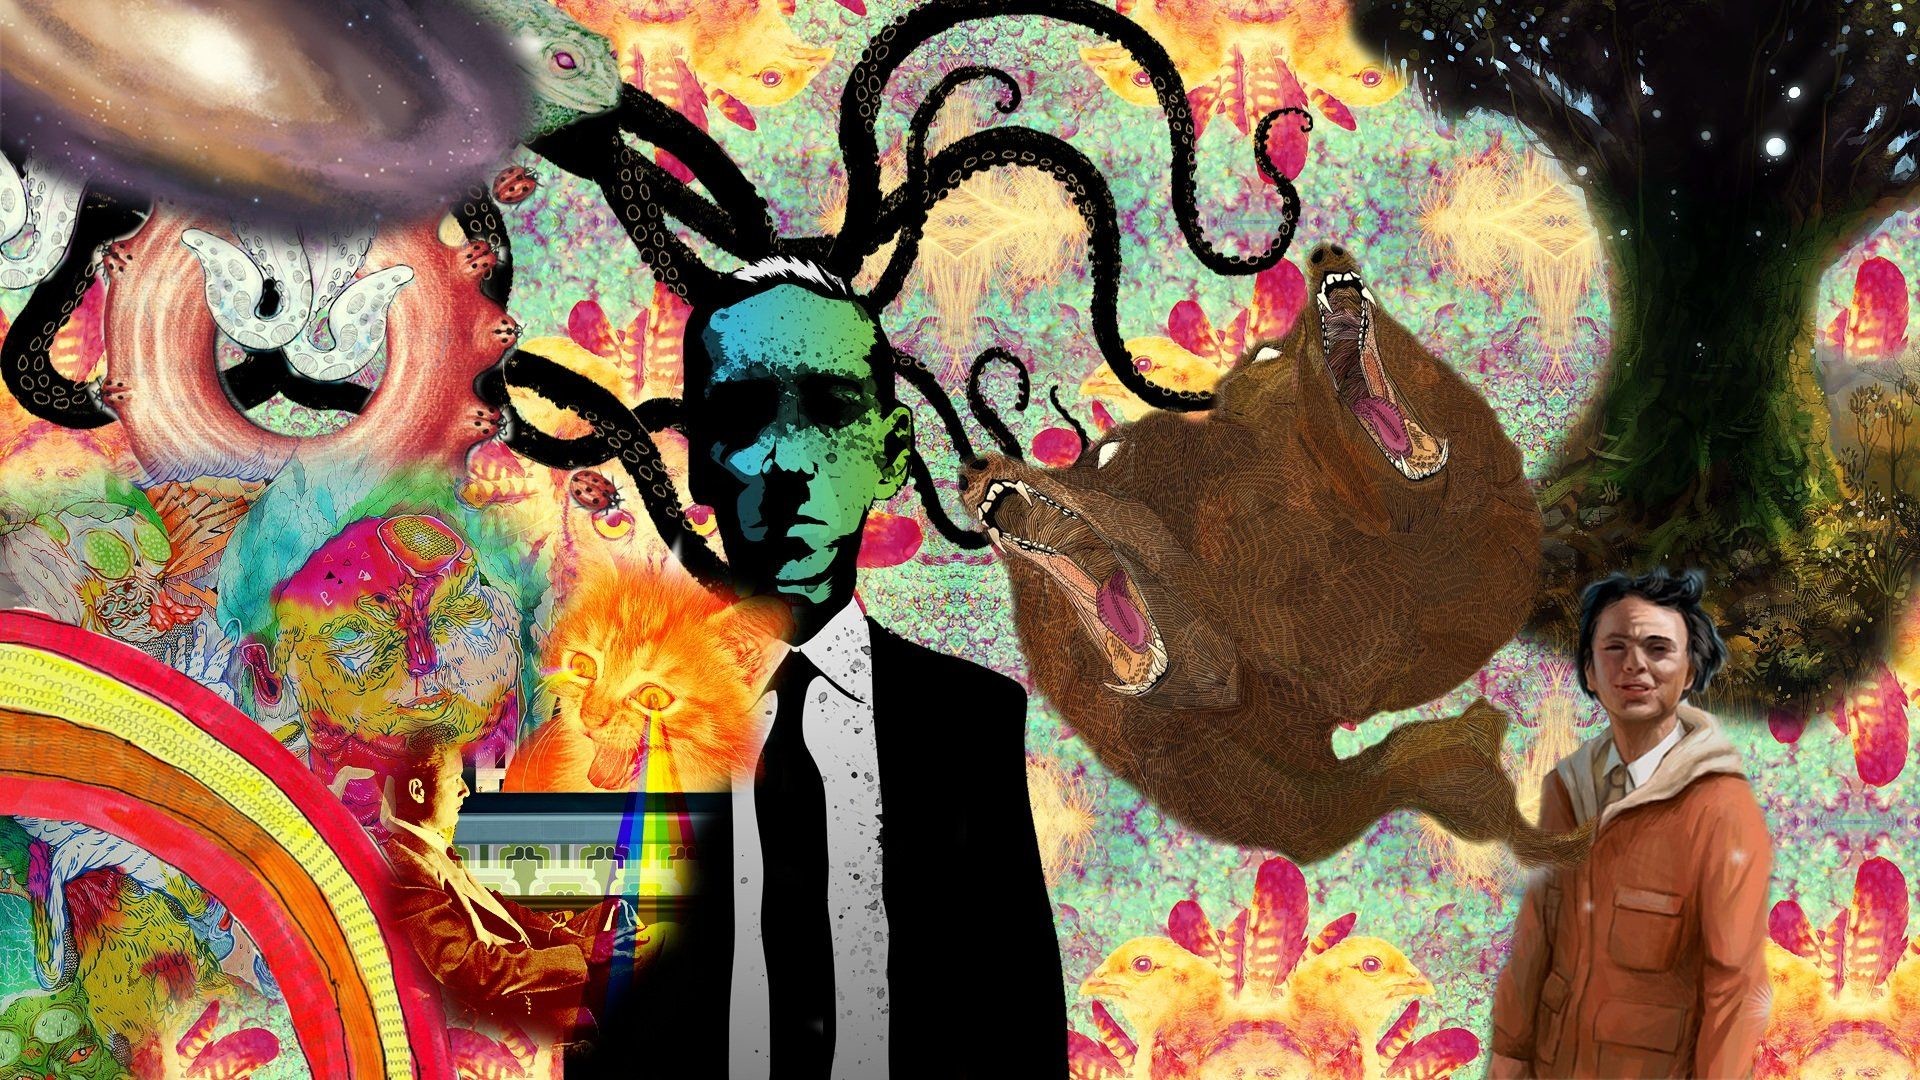 1920x1080 Carl Sagan HP Lovecraft wallpaper